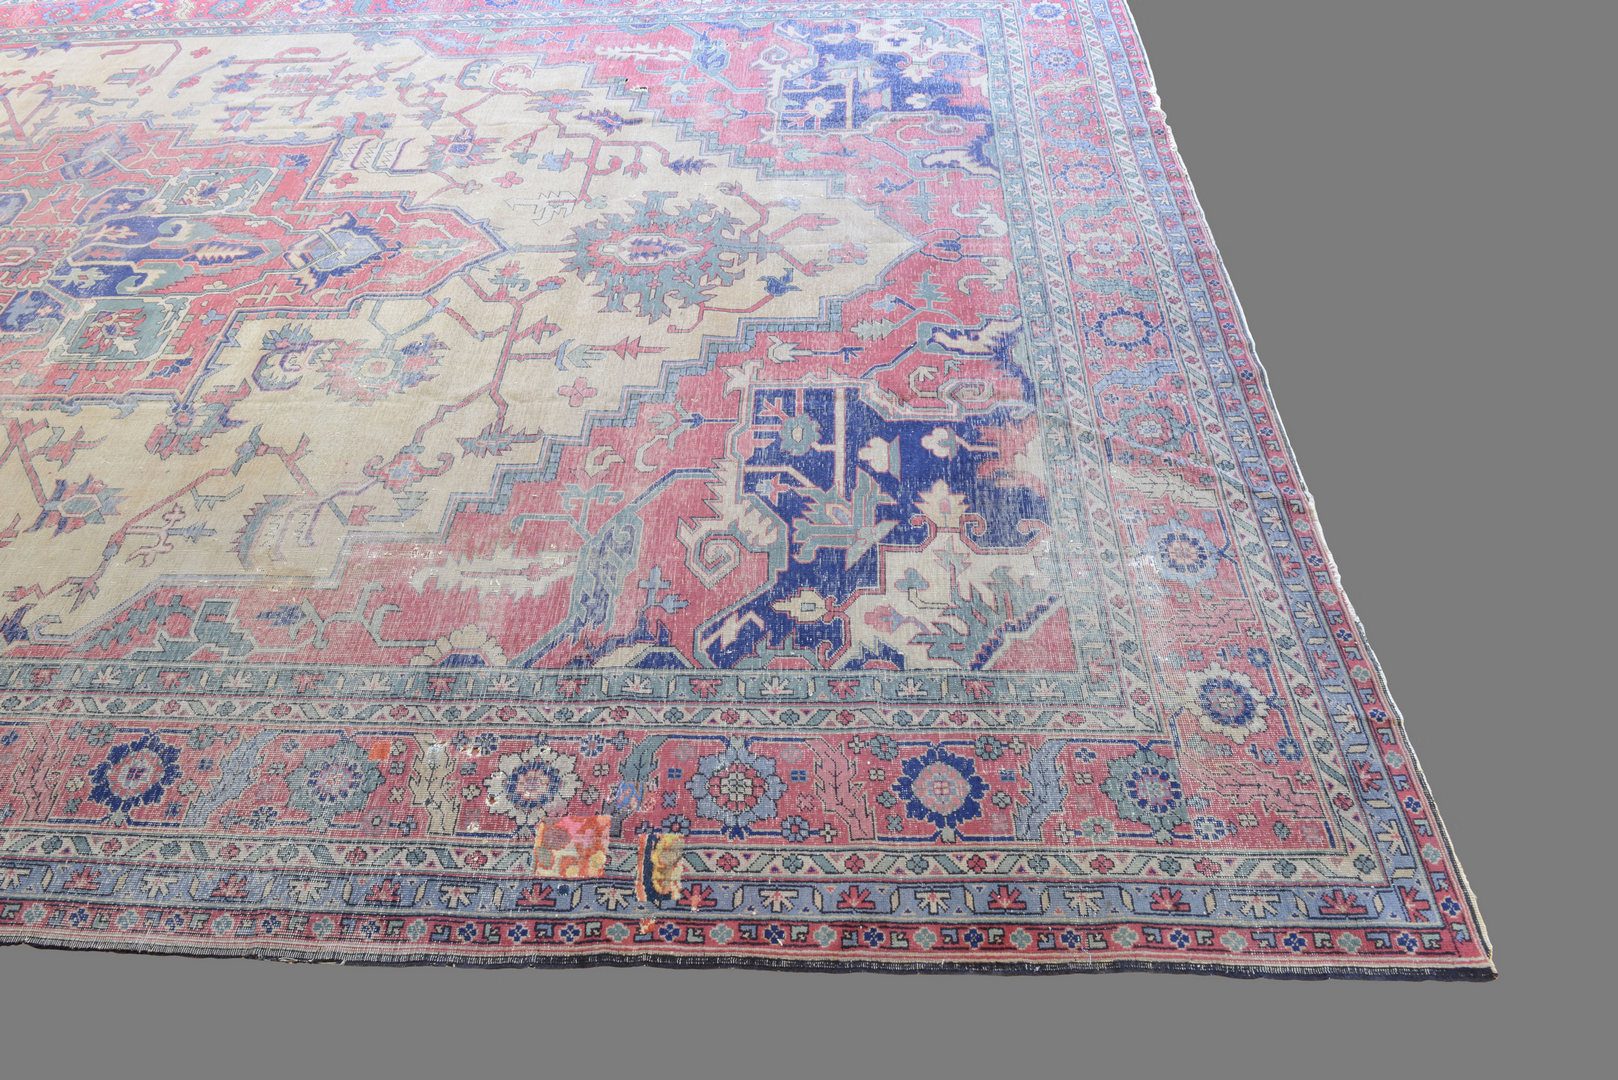 Lot 651: Antique Isparta Serapi style Carpet, 21'6" x 12'6"